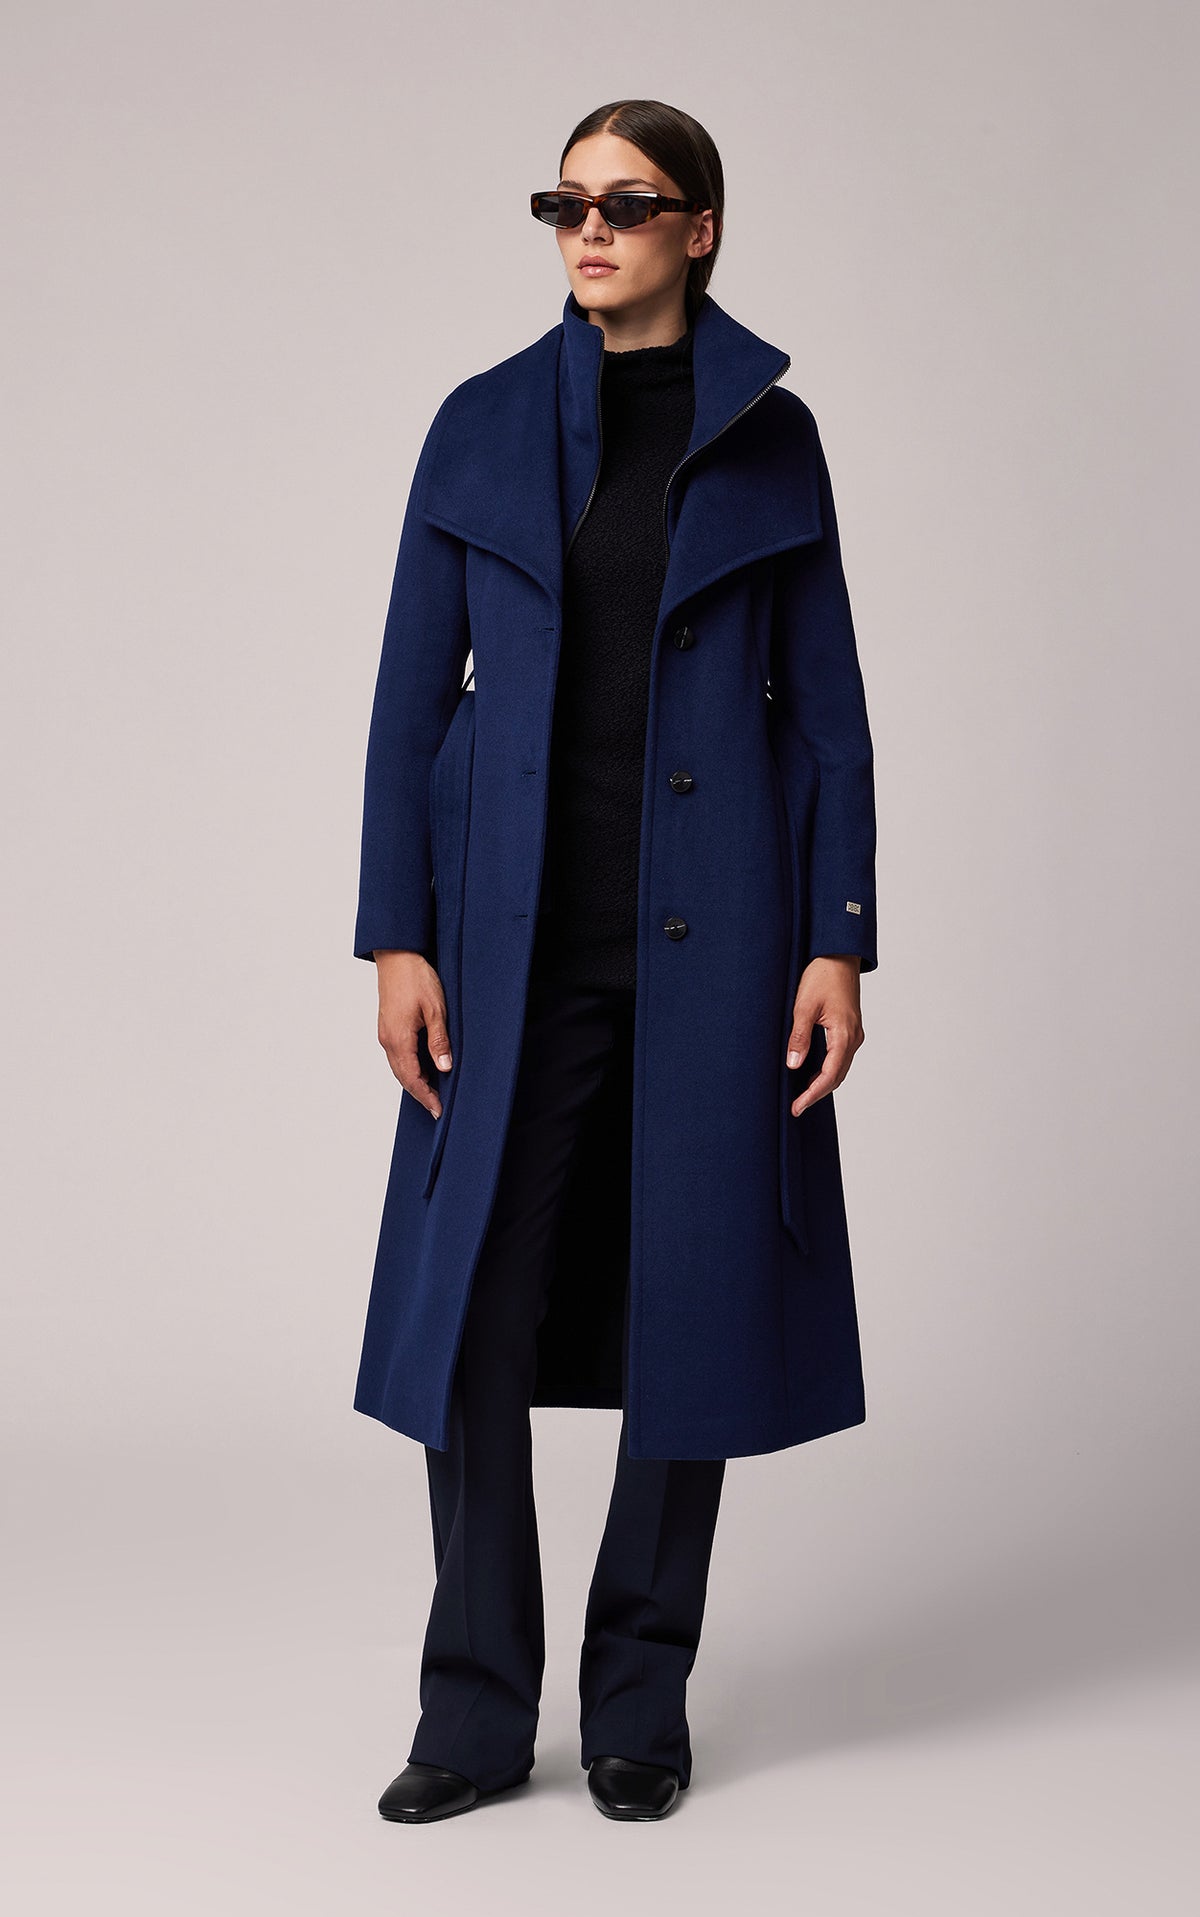 HSMQHJWE Womens Business Attire Wool Coats For Women With Hood